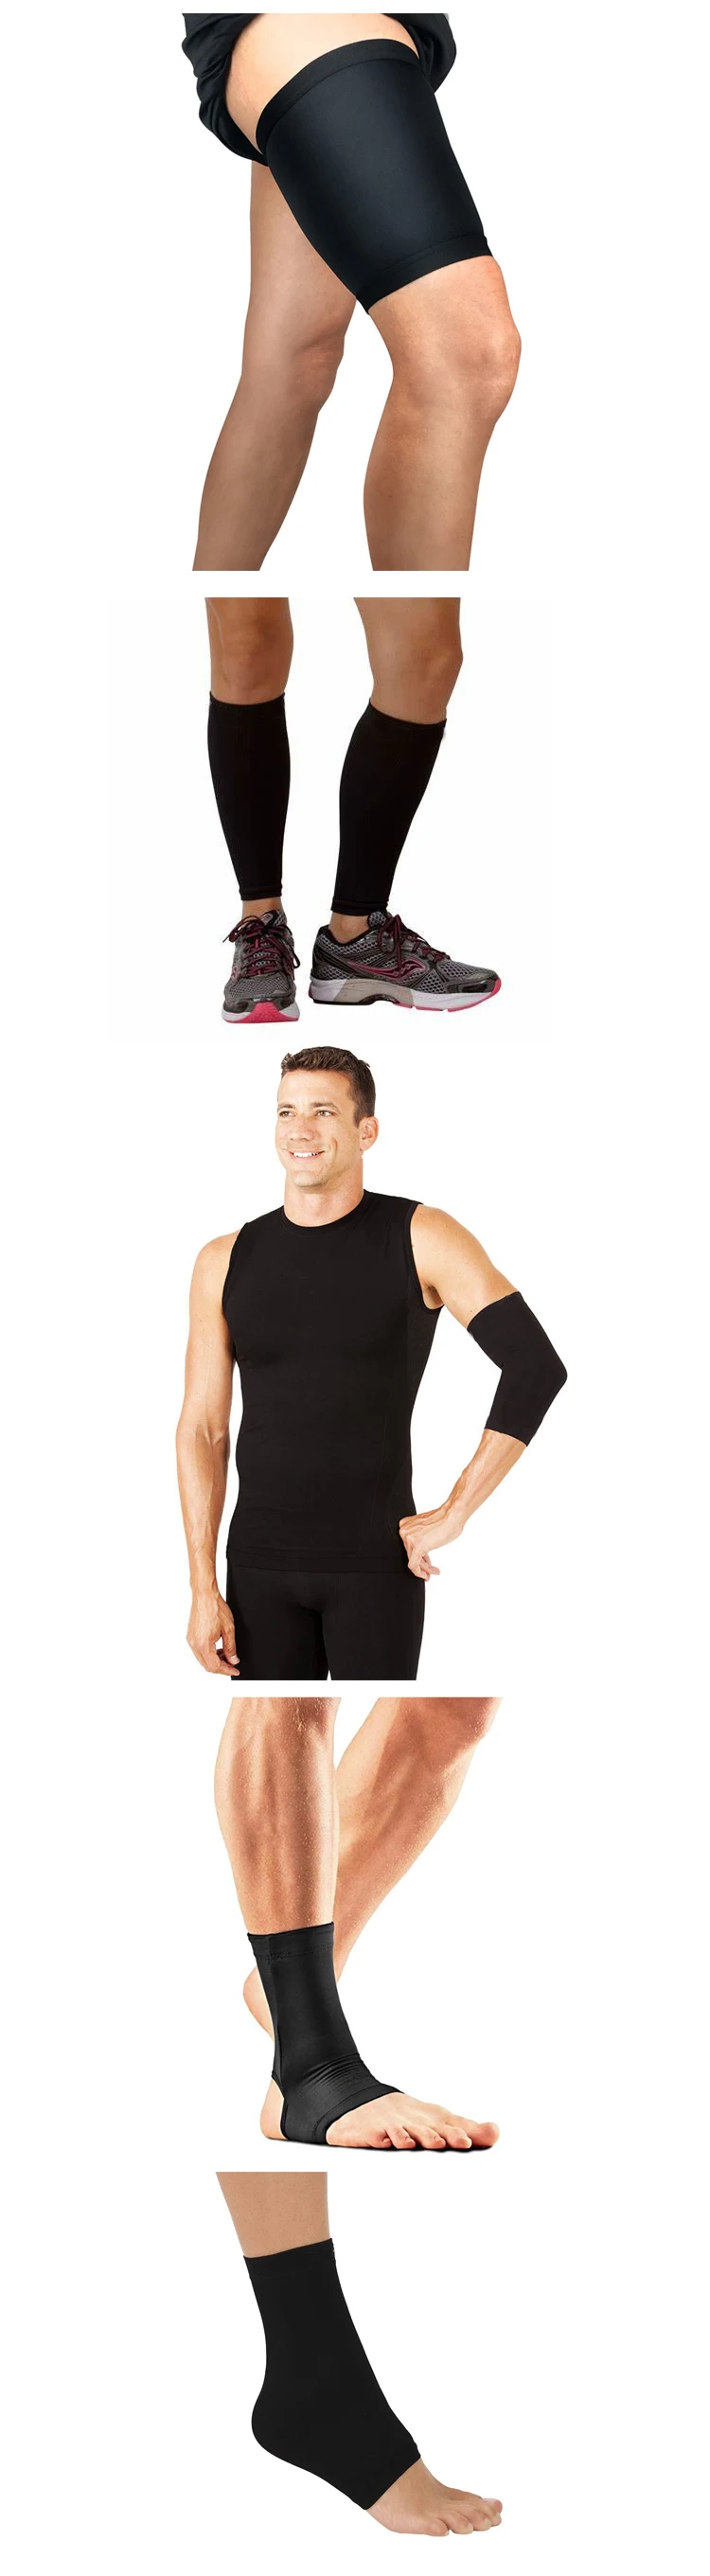 elastic custom protece gym sport shin compression calf sleeve guards